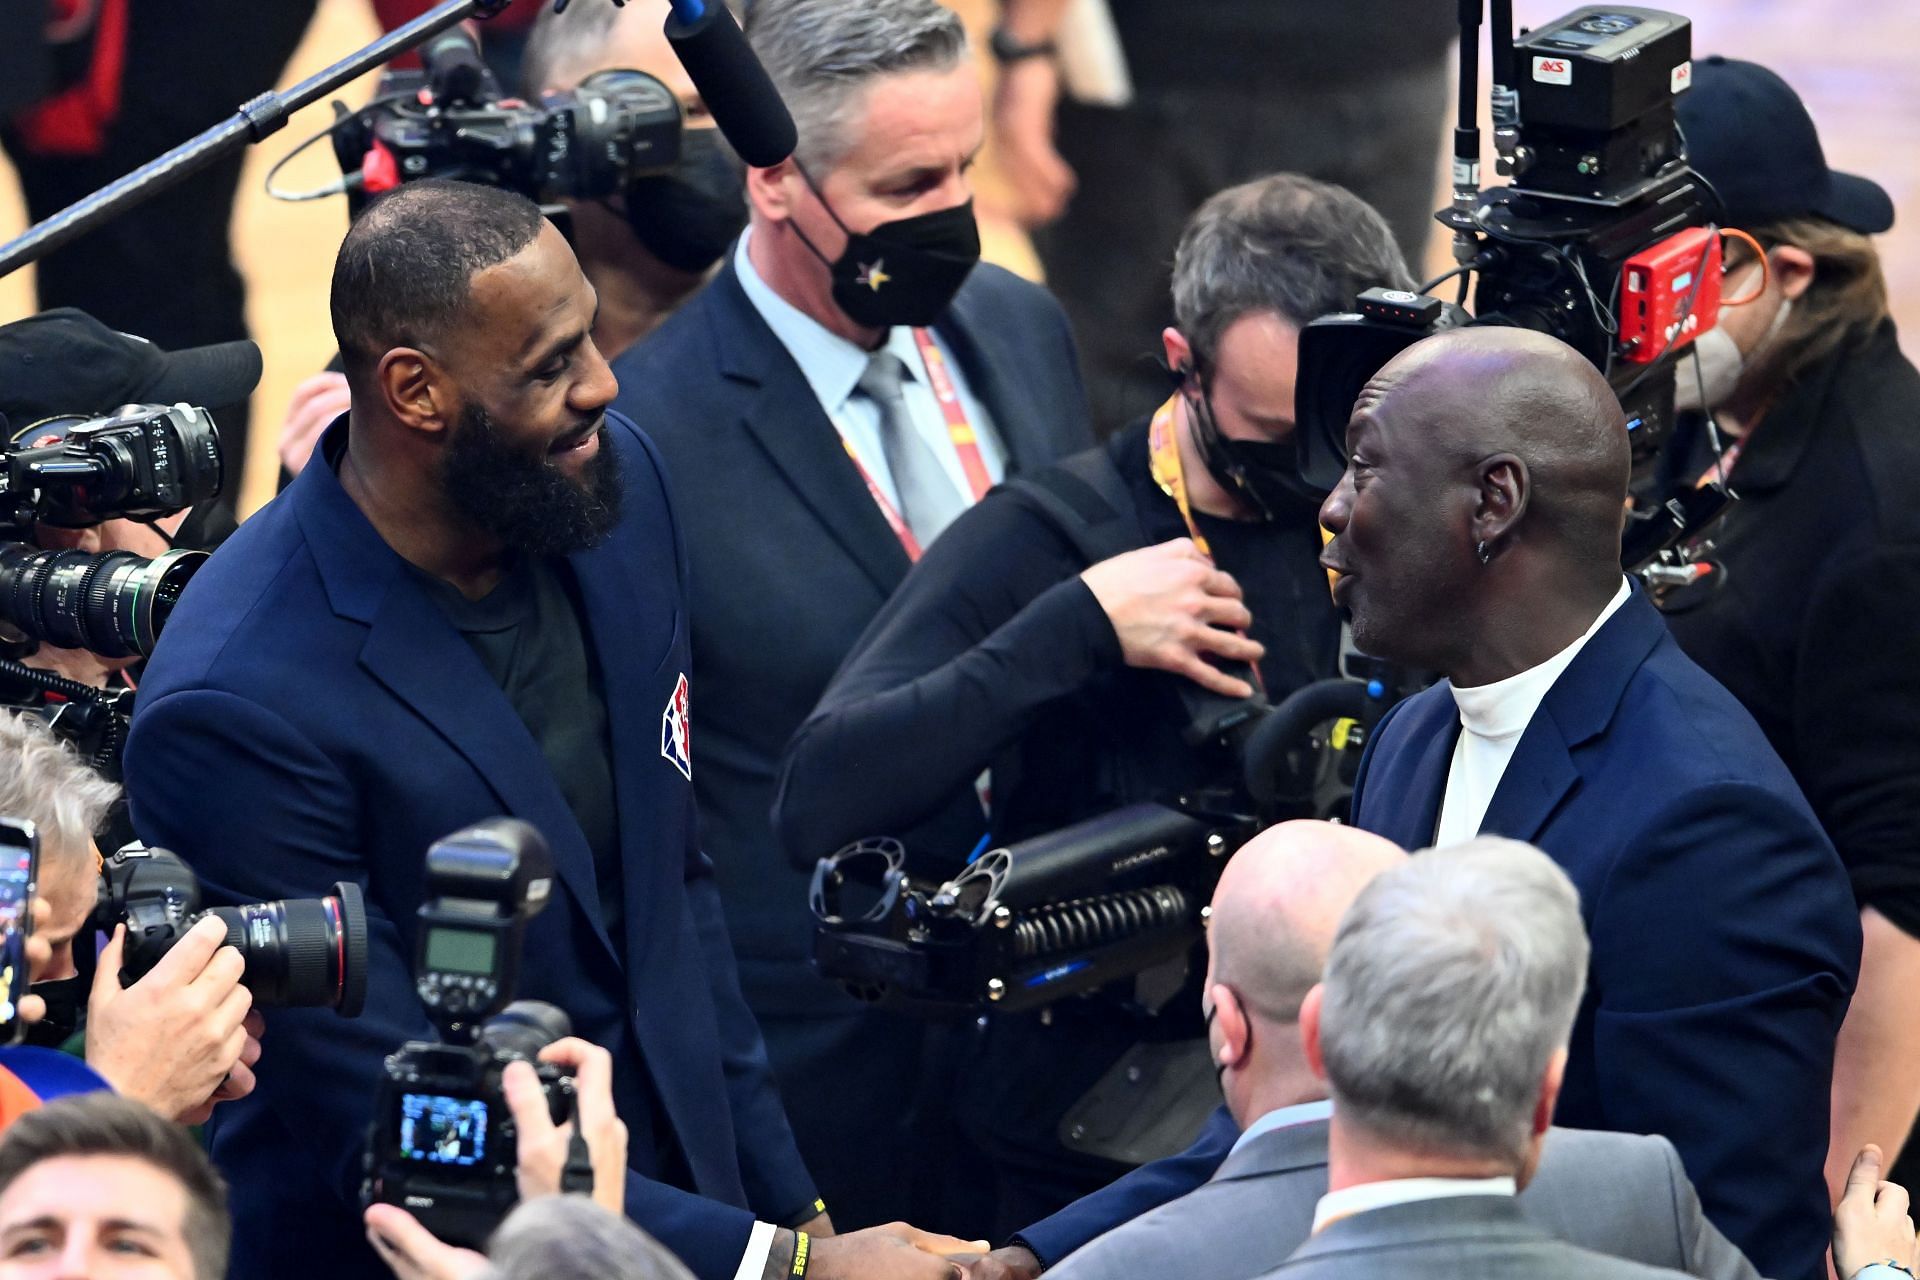 LeBron James and Michael Jordan embracing each other